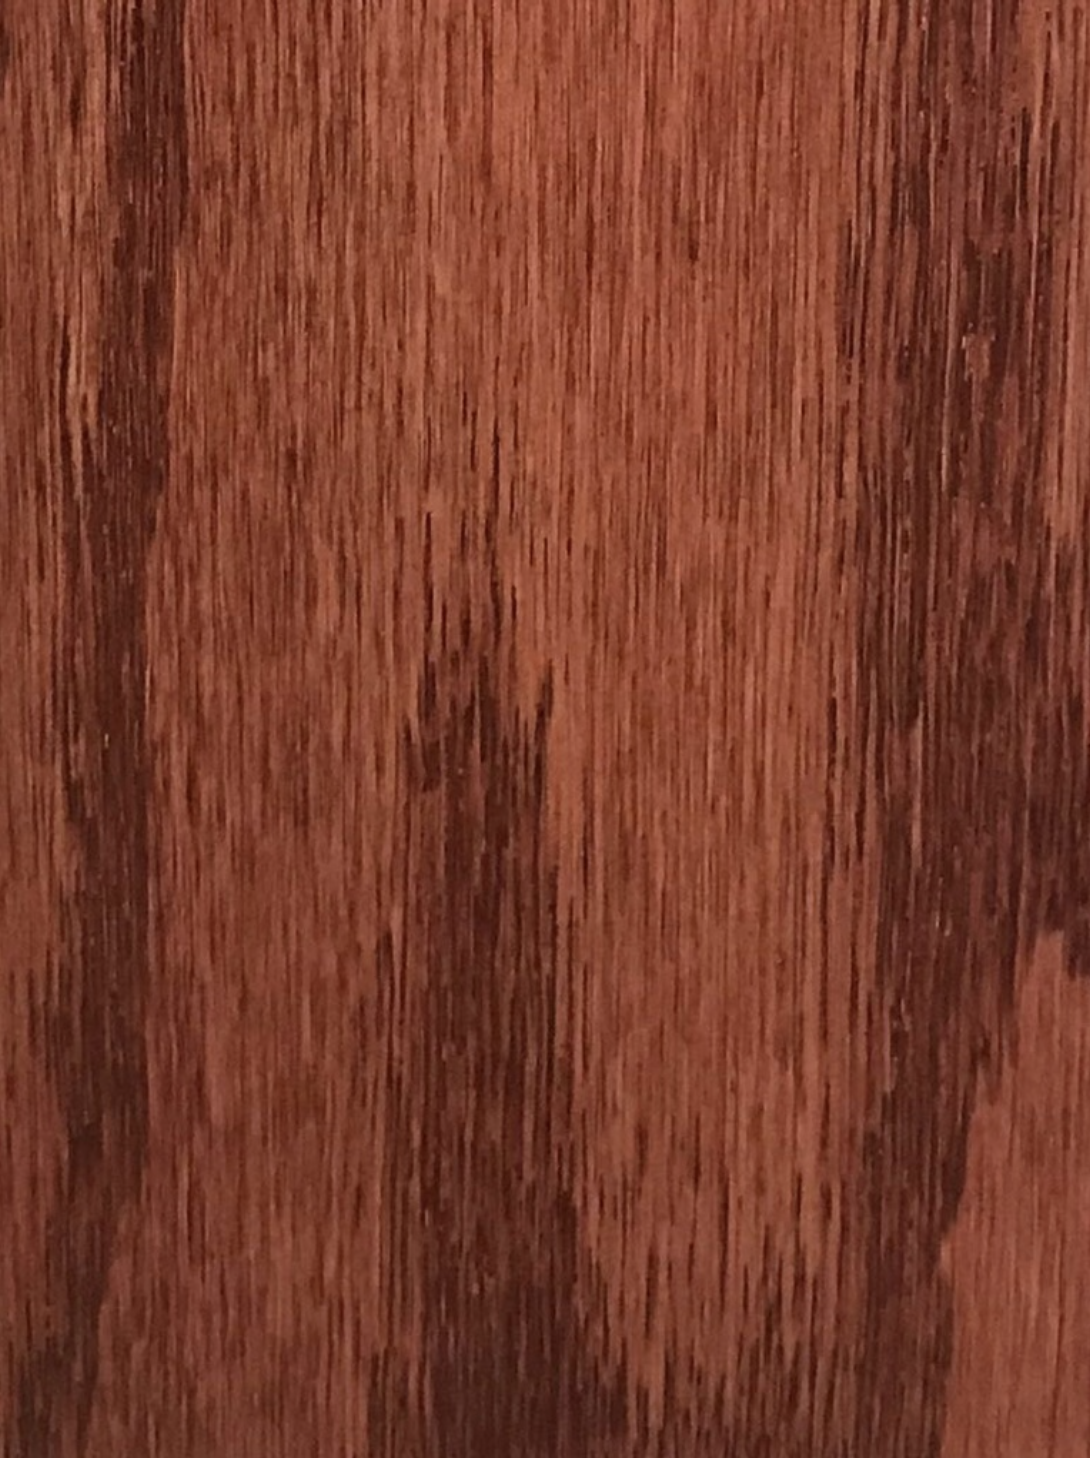 uphill cherry solid hardwood flooring